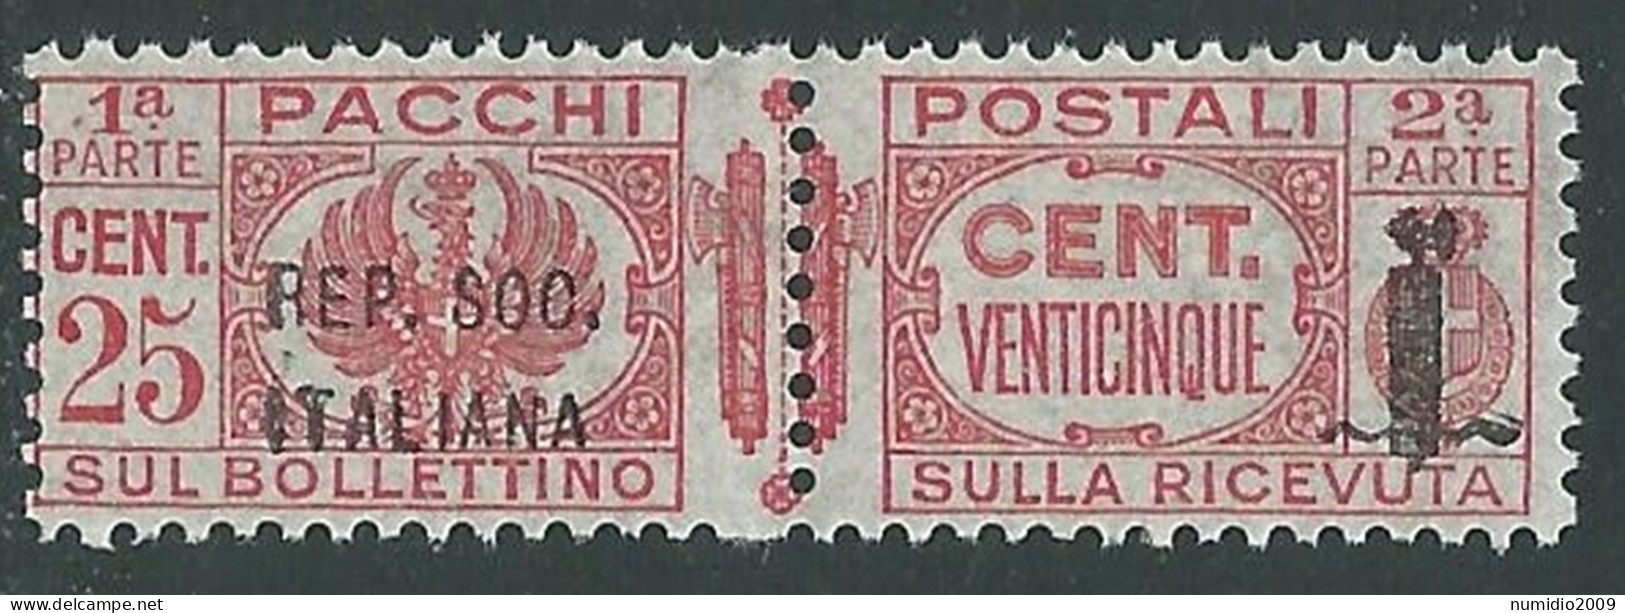 1944 RSI PACCHI POSTALI 25 CENT MNH ** - P29-6 - Postal Parcels